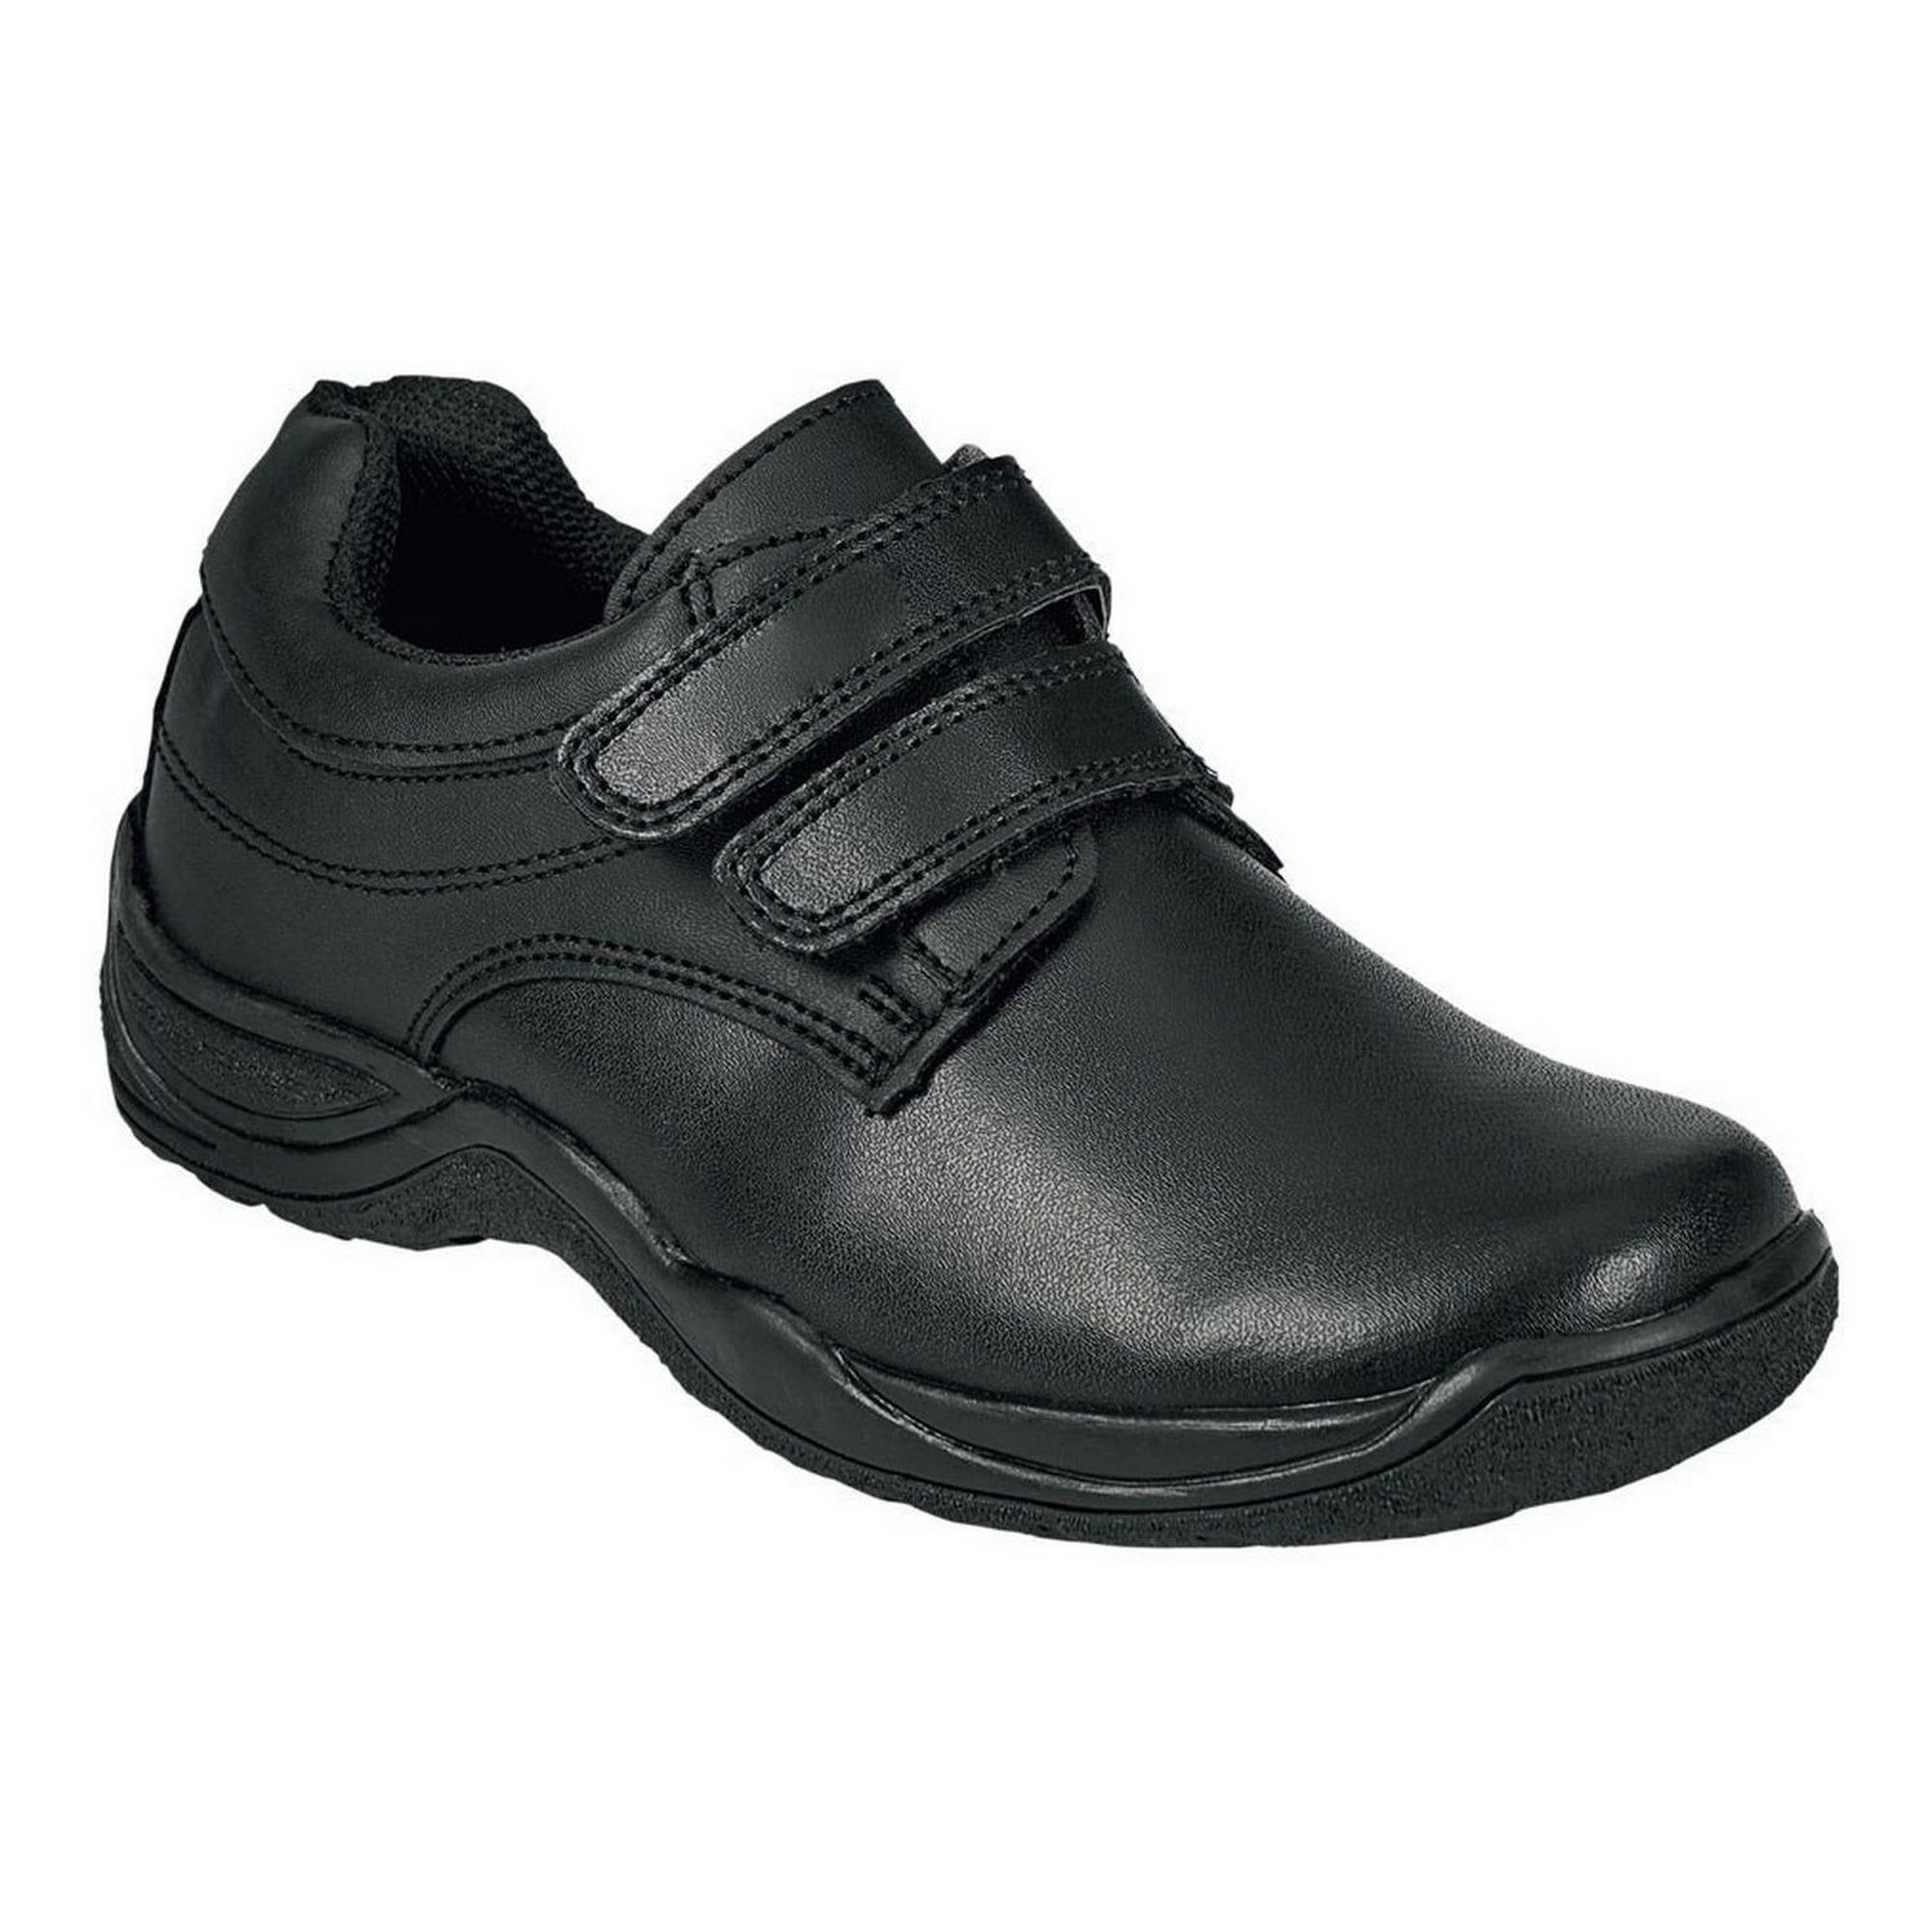 Calzado Kids Niño Zapato Escolar Tipo Piel En Negro Comodo negro 19 ...